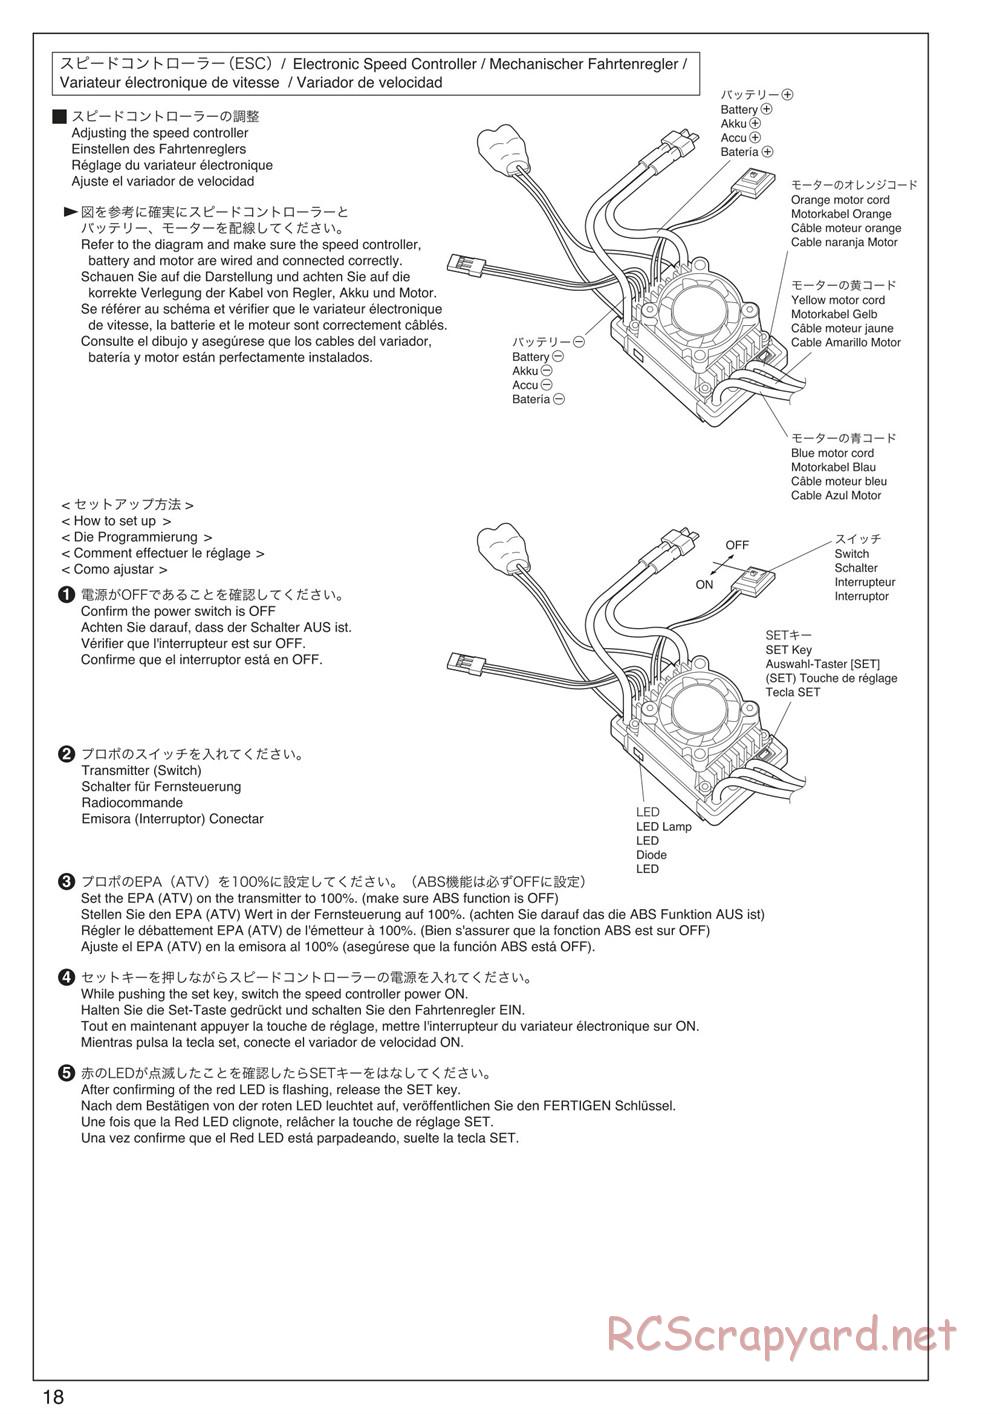 Kyosho - DMT-VE - Manual - Page 18